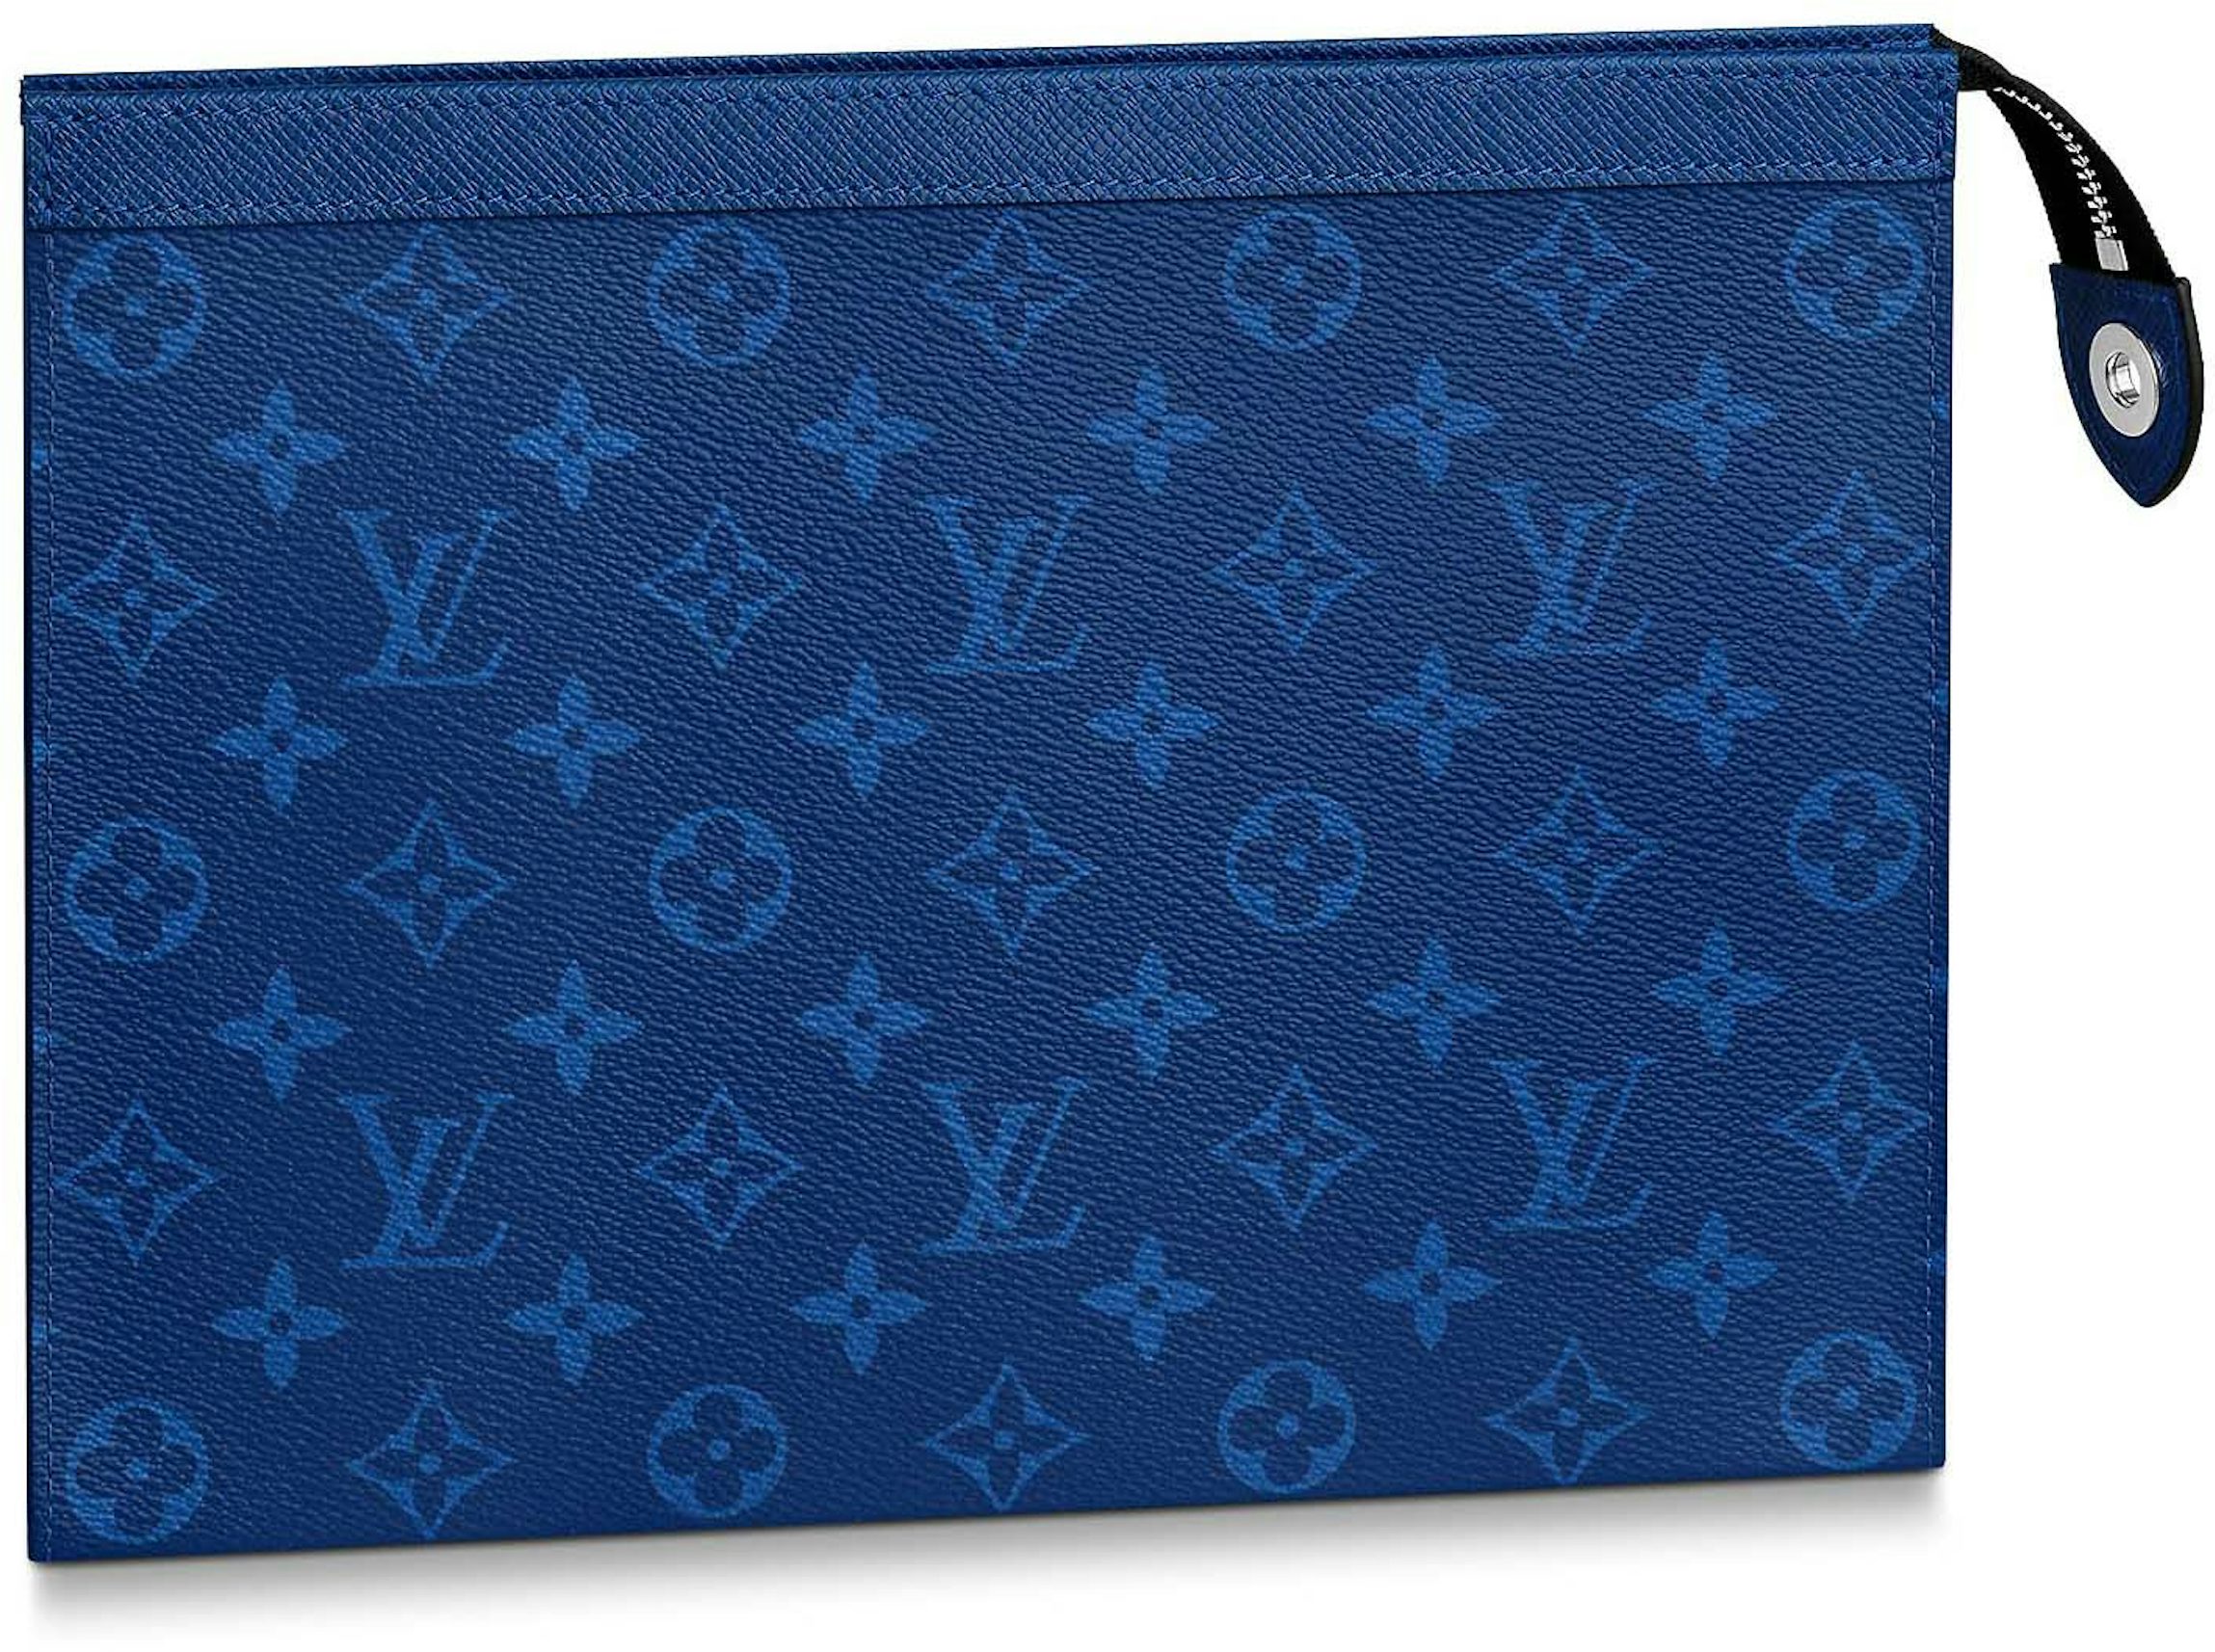 Louis Vuitton Pochette Voyage MM Pacific Blue in Monogram Coated